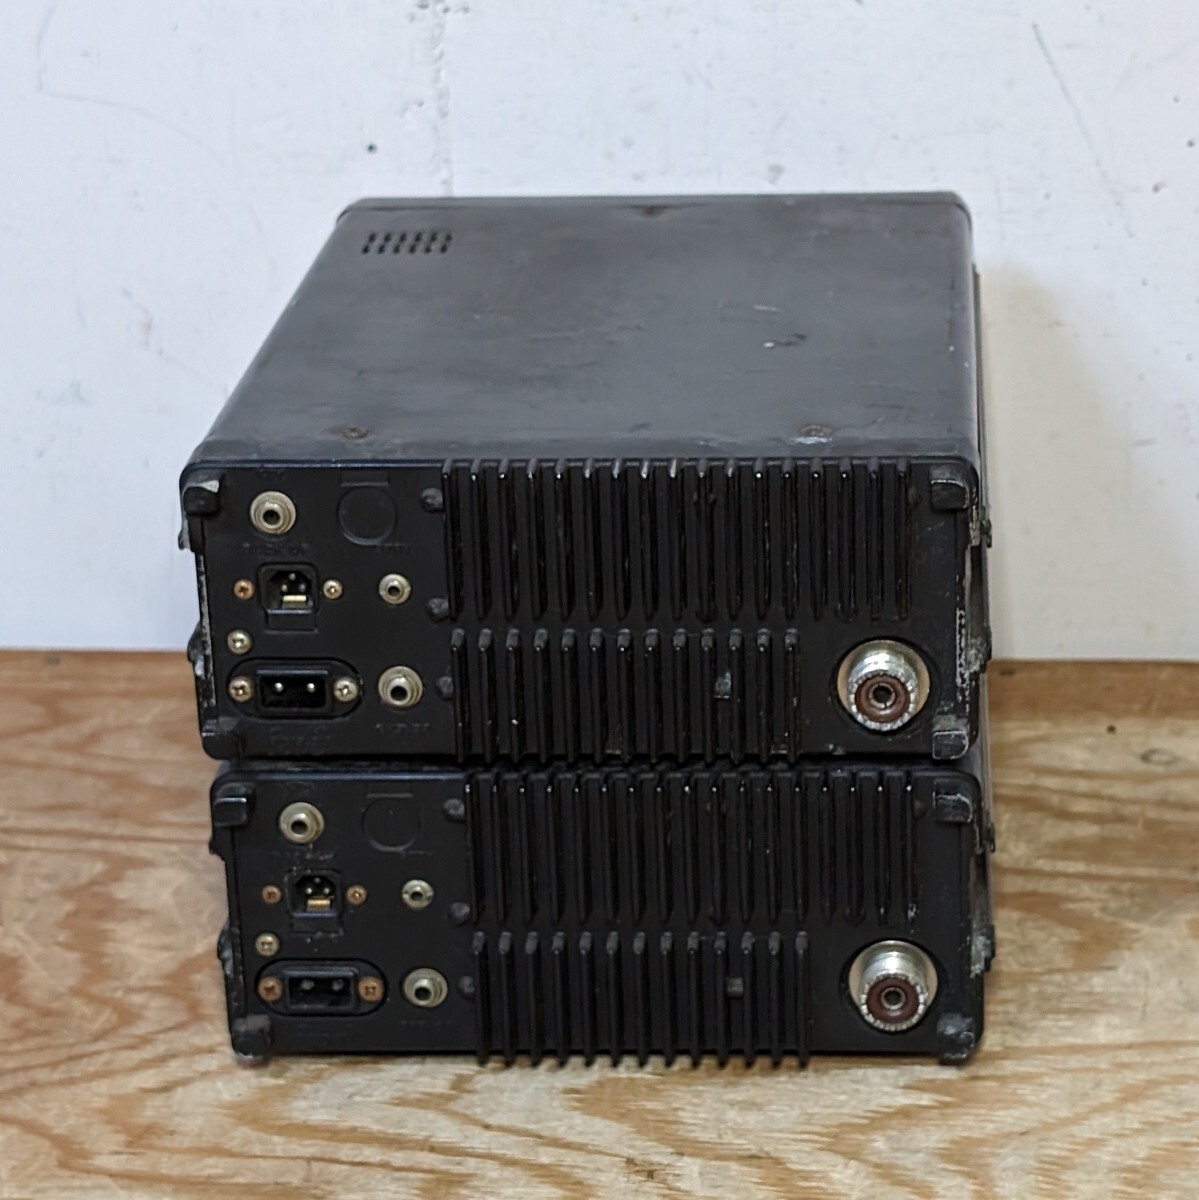 TRIO Trio UHF all mode приемопередатчик TR-95002m all mode приемопередатчик TR-9000G работоспособность не проверялась утиль 